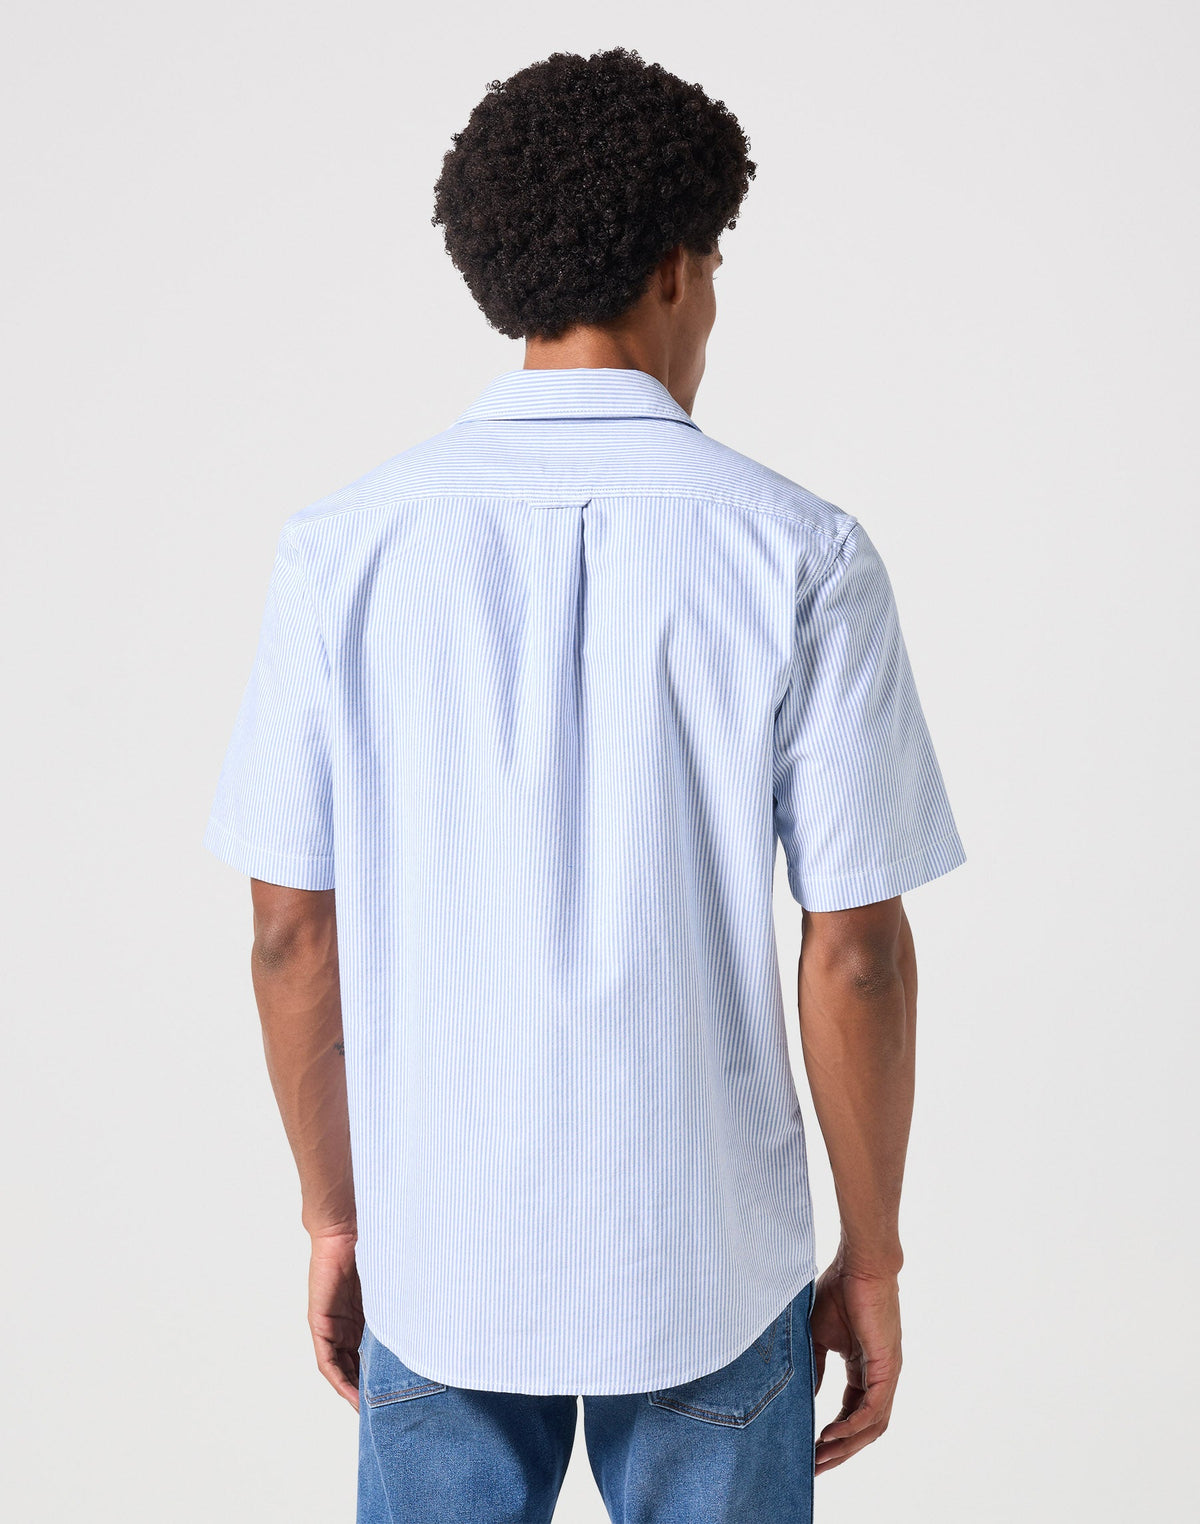 Short Sleeves Shirt in Blue Stripe Oxford